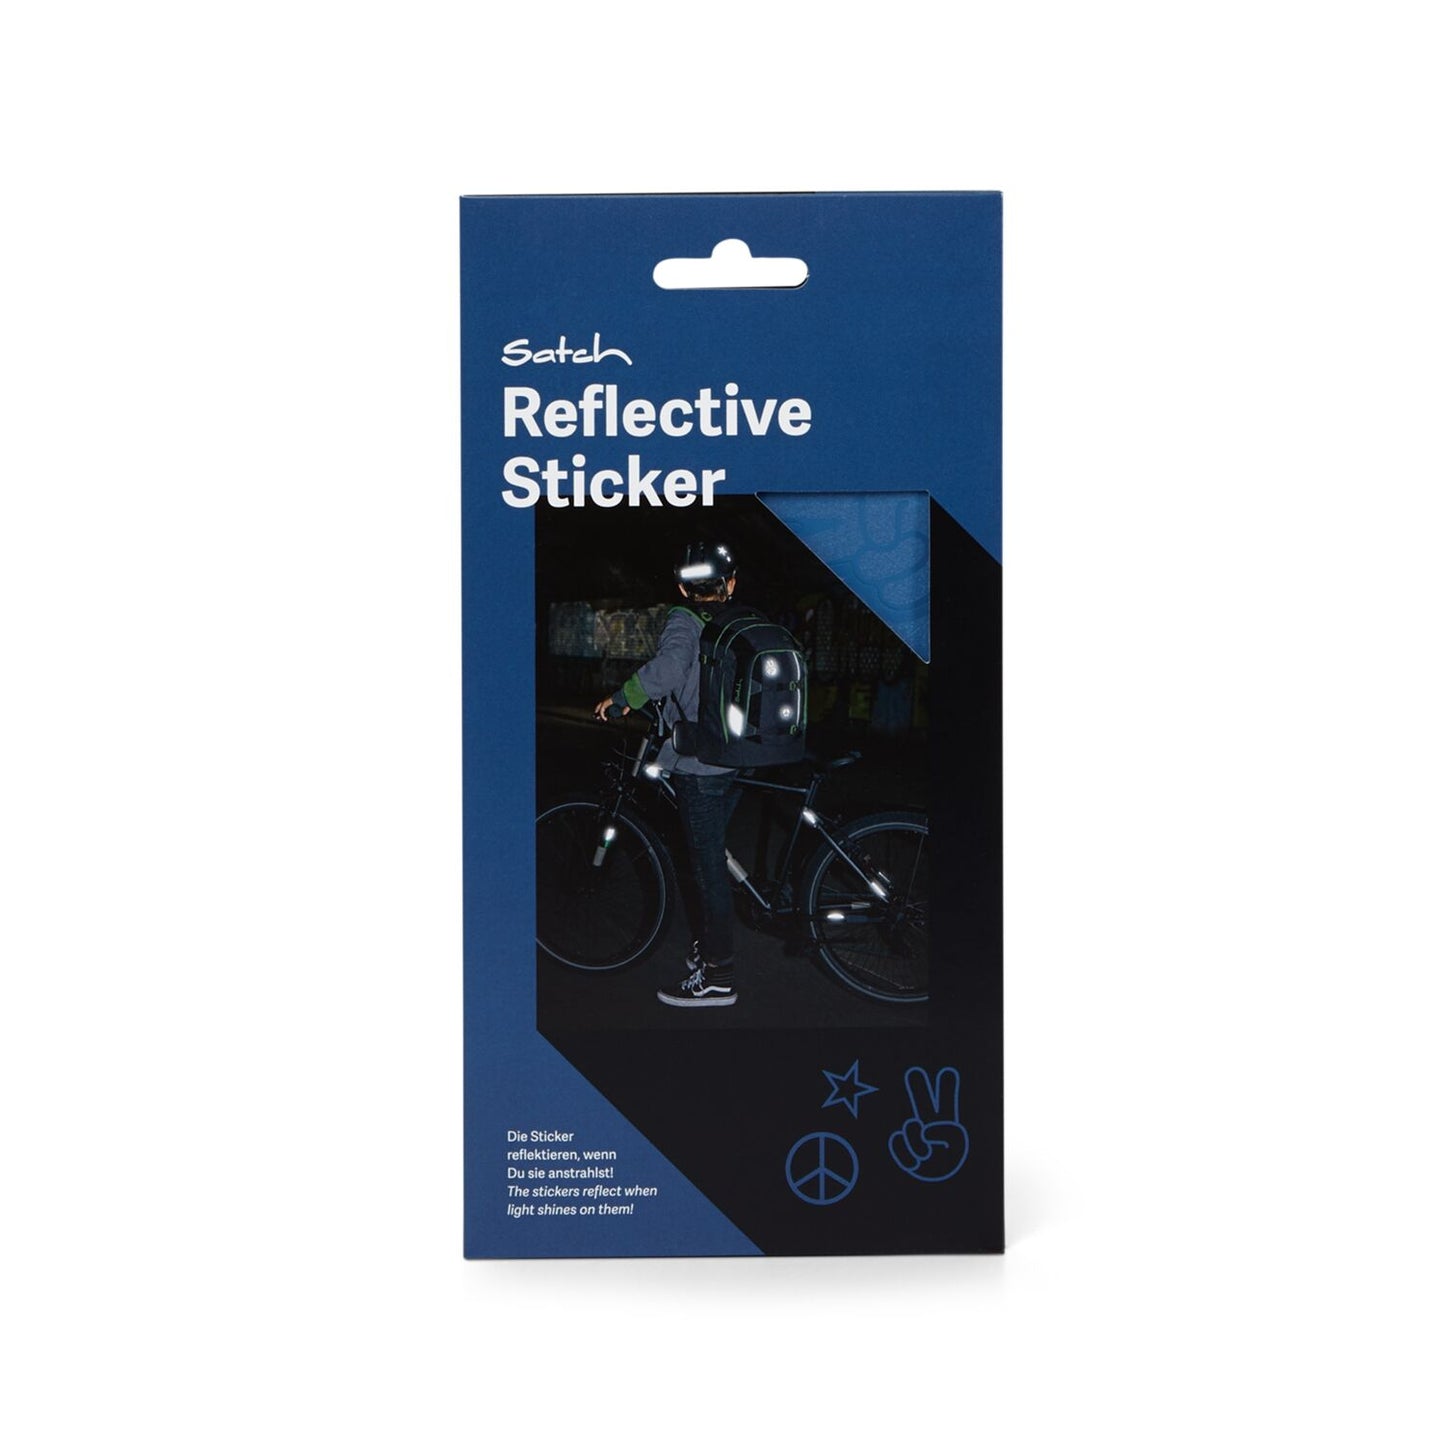 Reflective Sticker blau